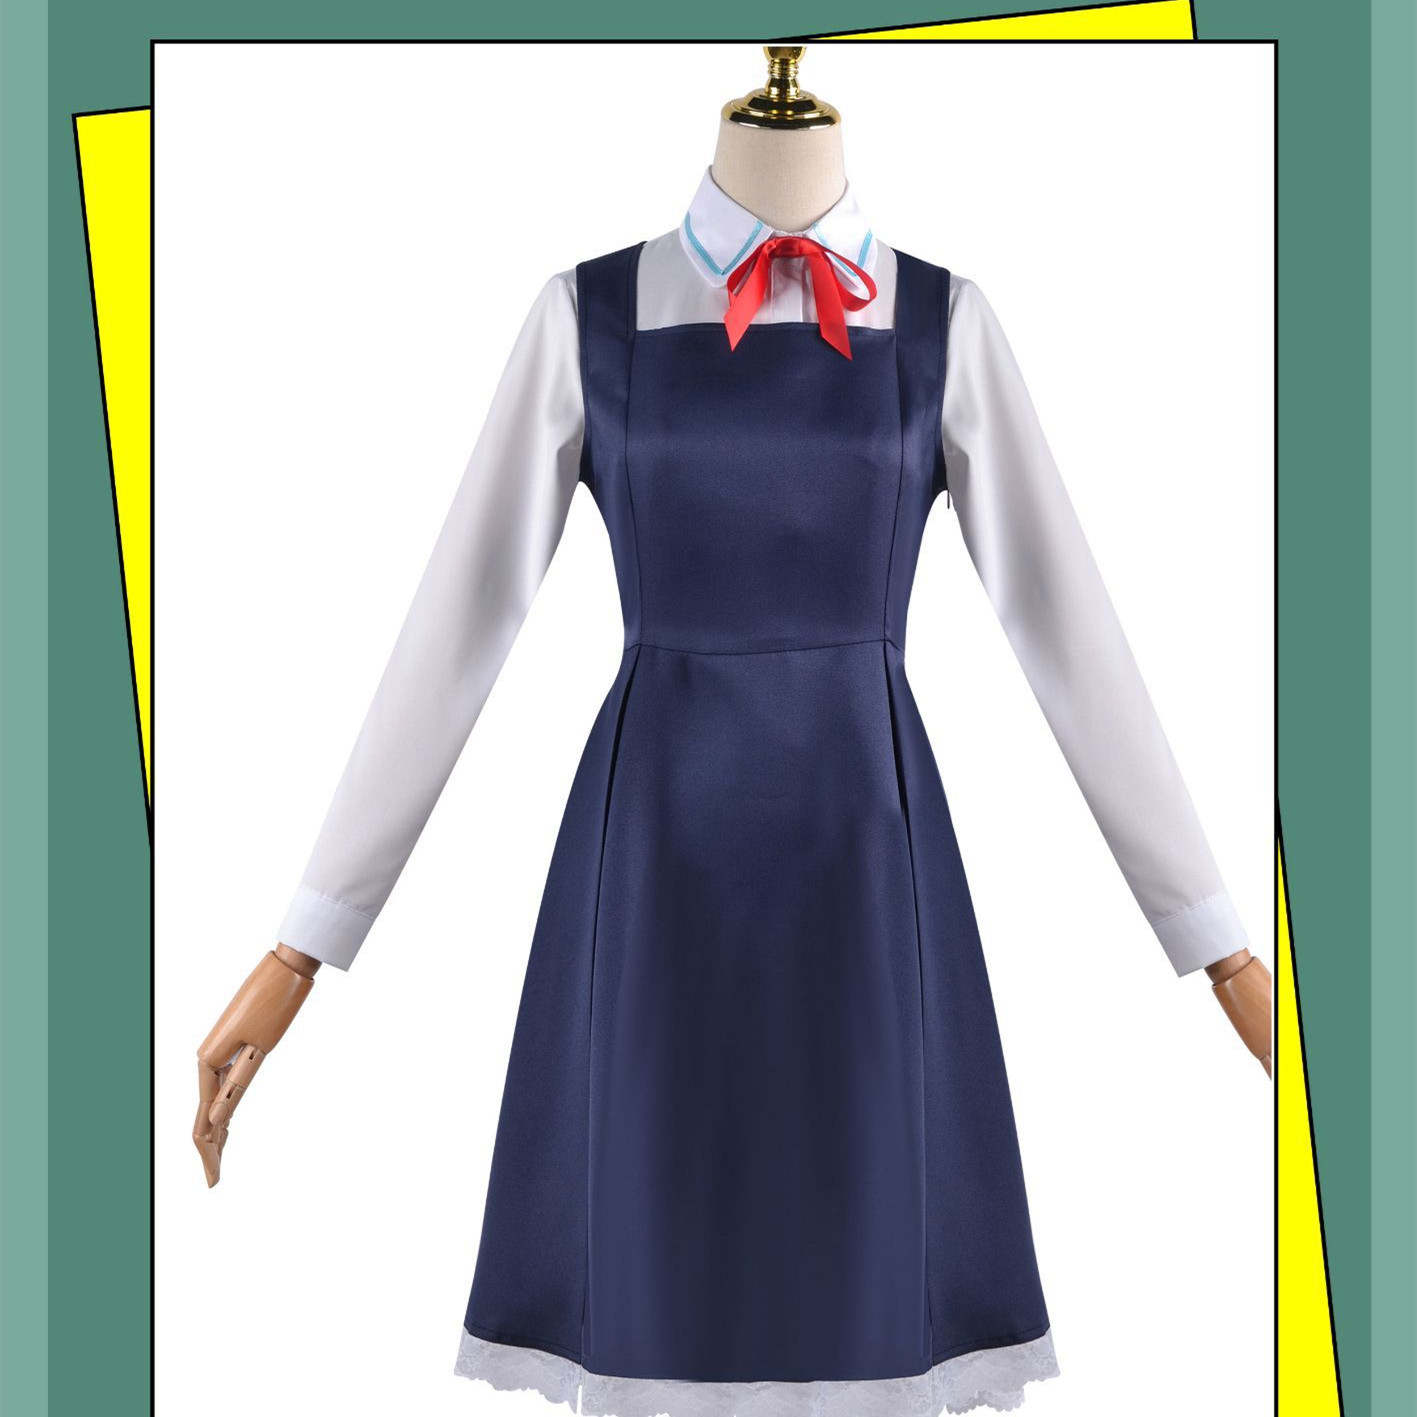 Anime Little Witch Academia halloween girls school uniform dress